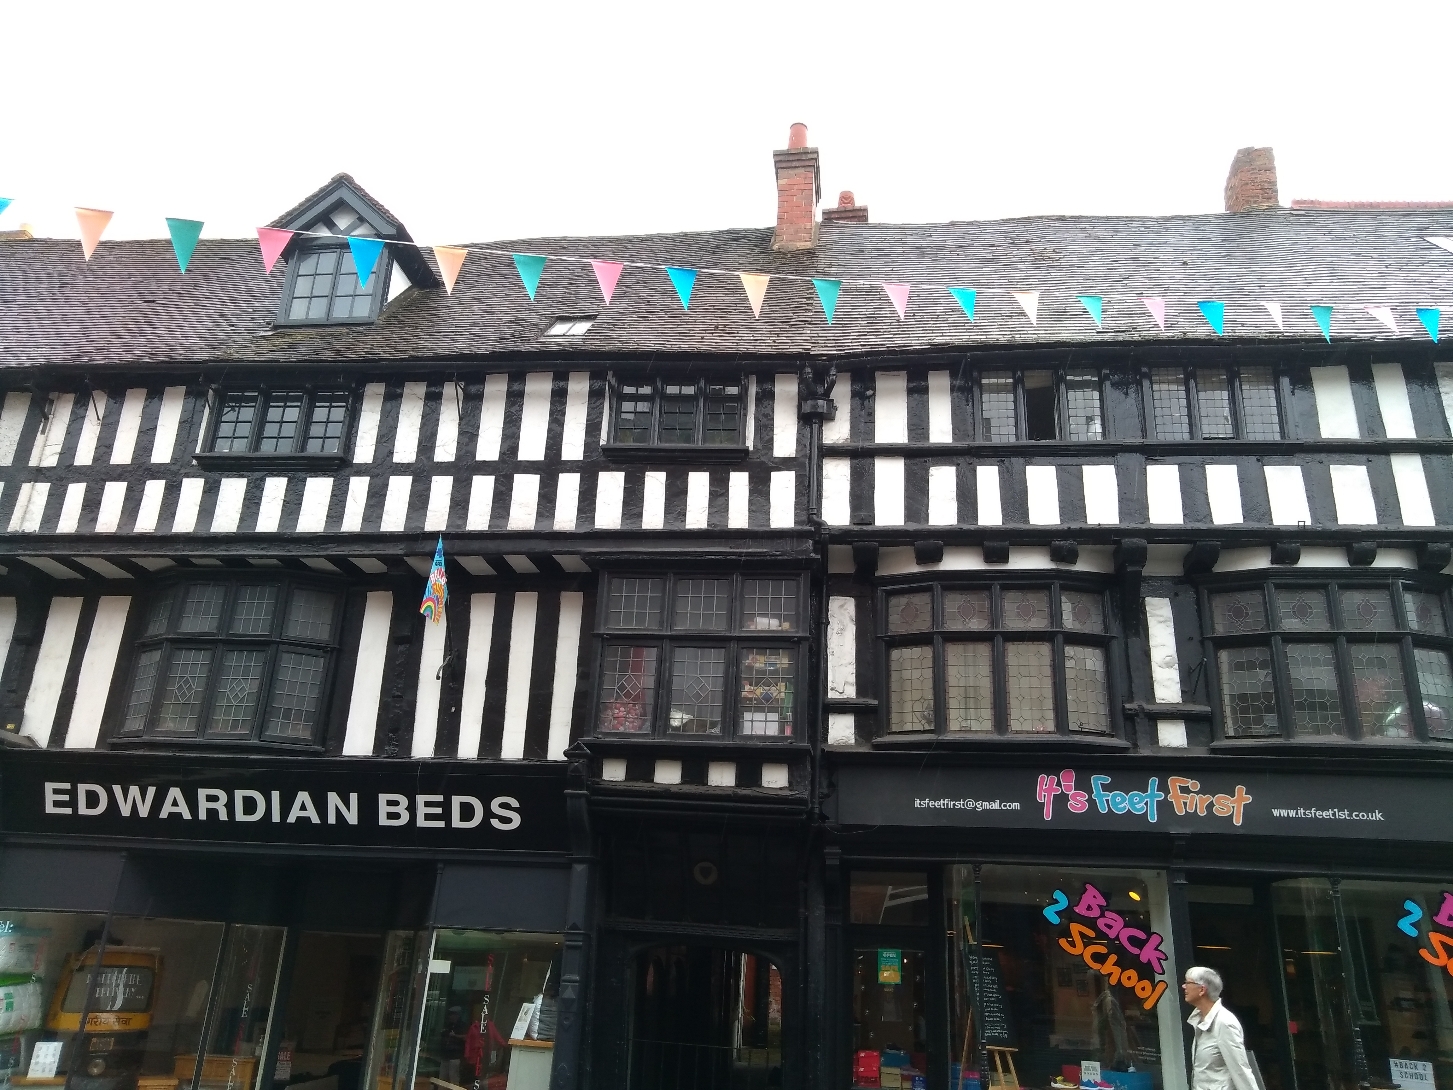 Shrewsbury Medieval Shops